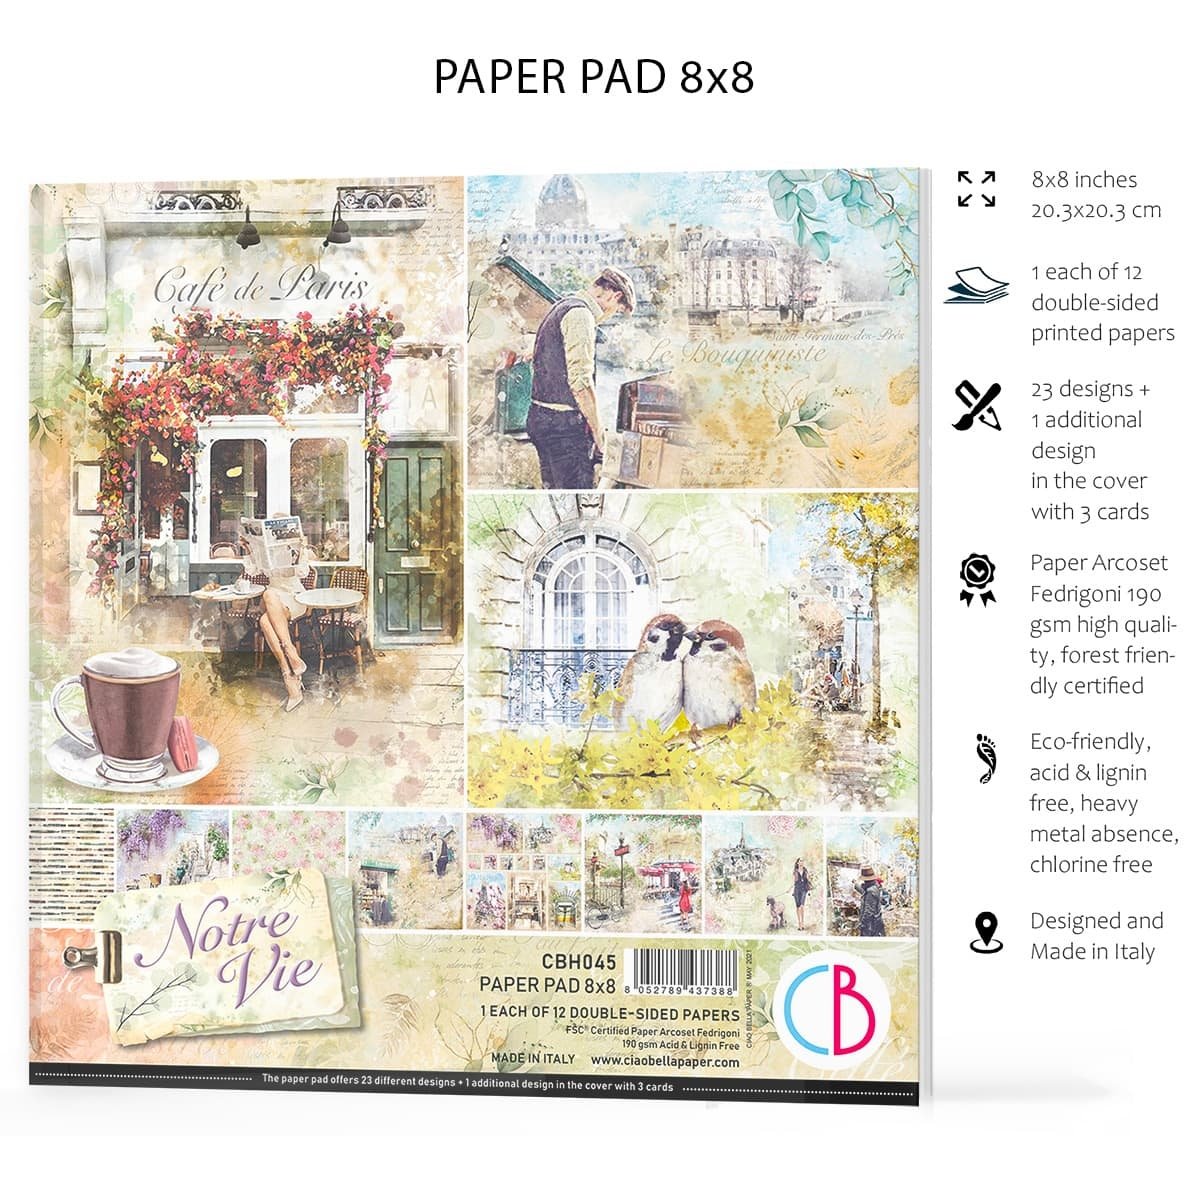 Ciao Bella - Notre Vie - Paper Pad - 8x8 inch - Pack of 12 Ciao Bella